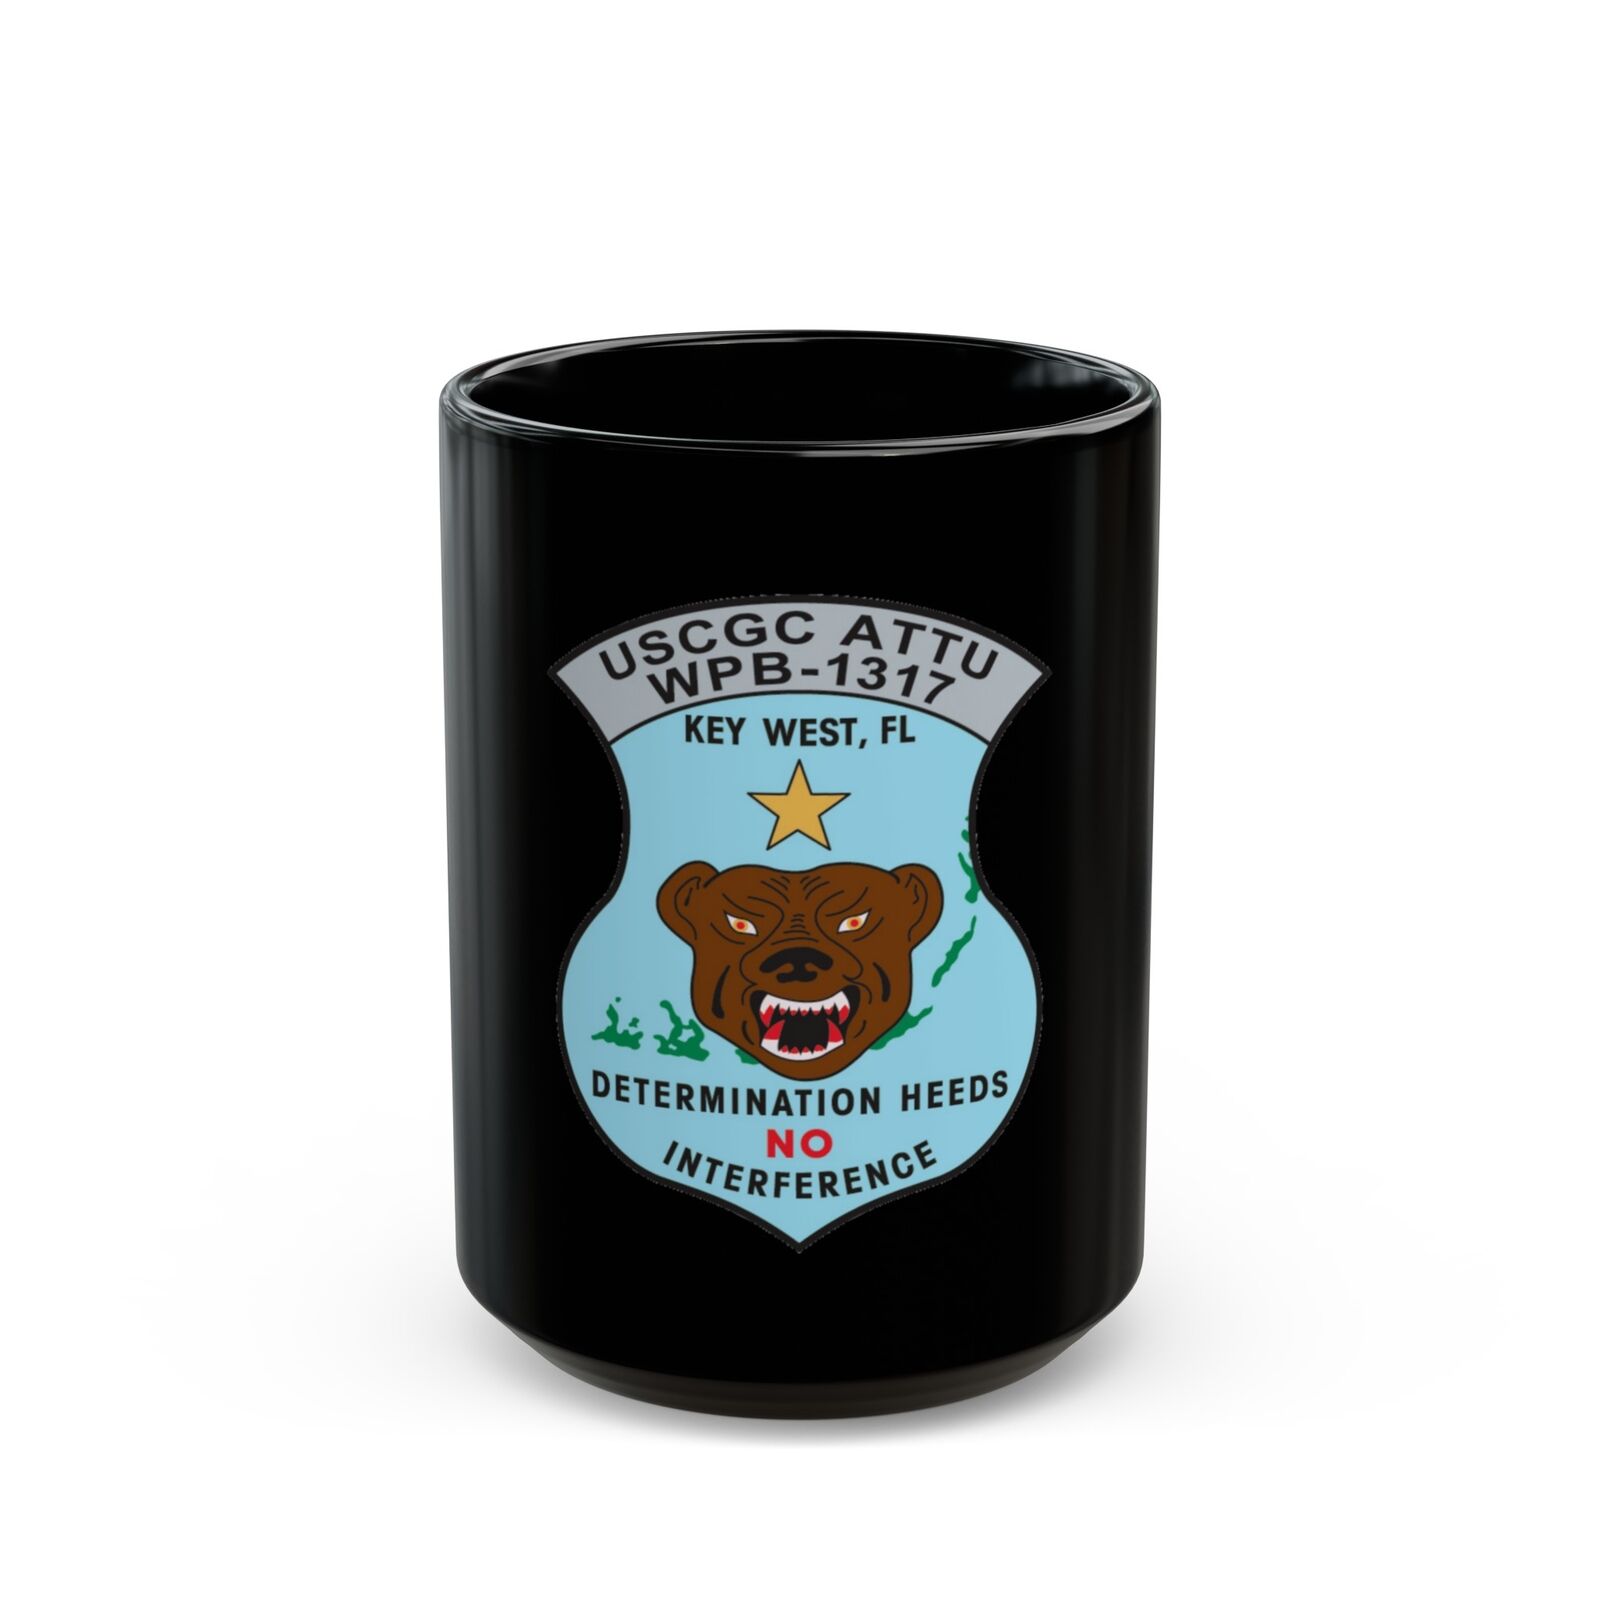 USCGC Attu WPB 1317   Key West FL (U.S. Coast Guard) Black Coffee Mug